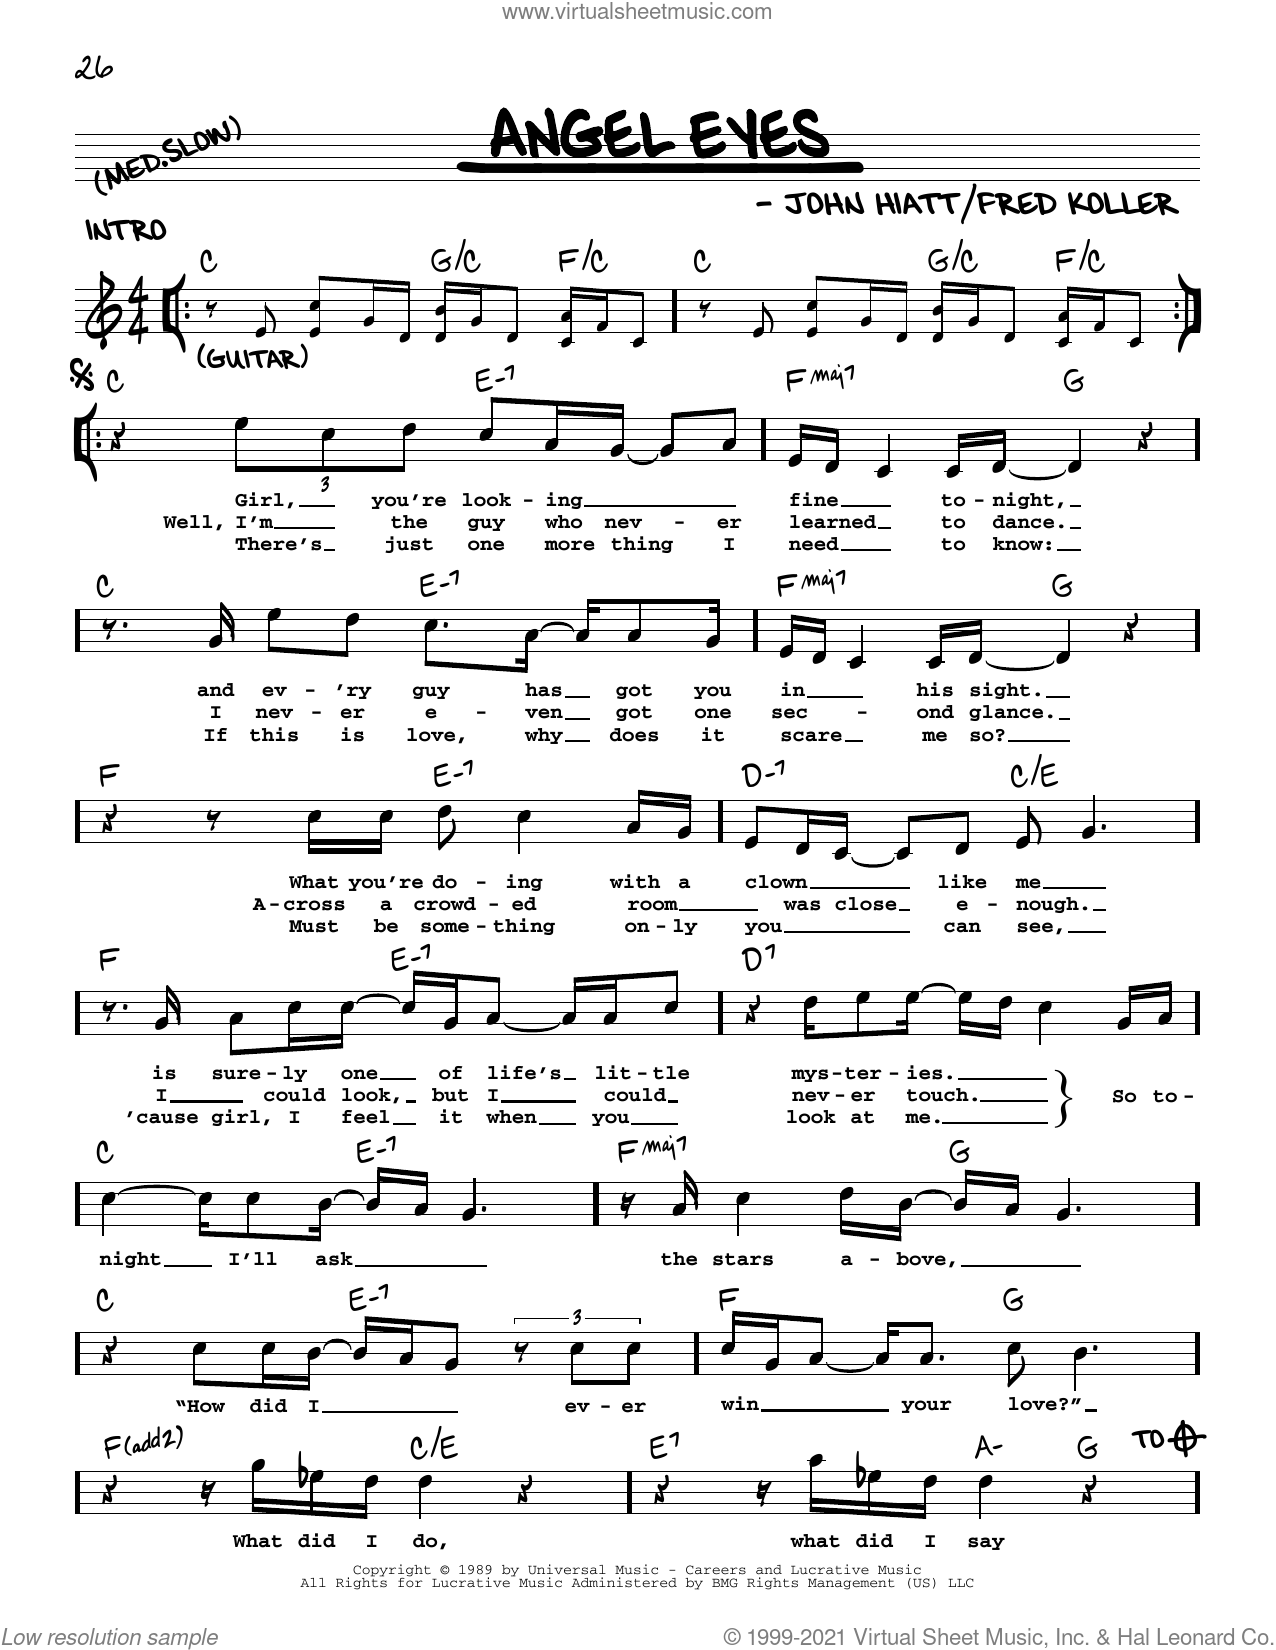 John Hiatt: Angel Eyes sheet music (real book with lyrics) (PDF)